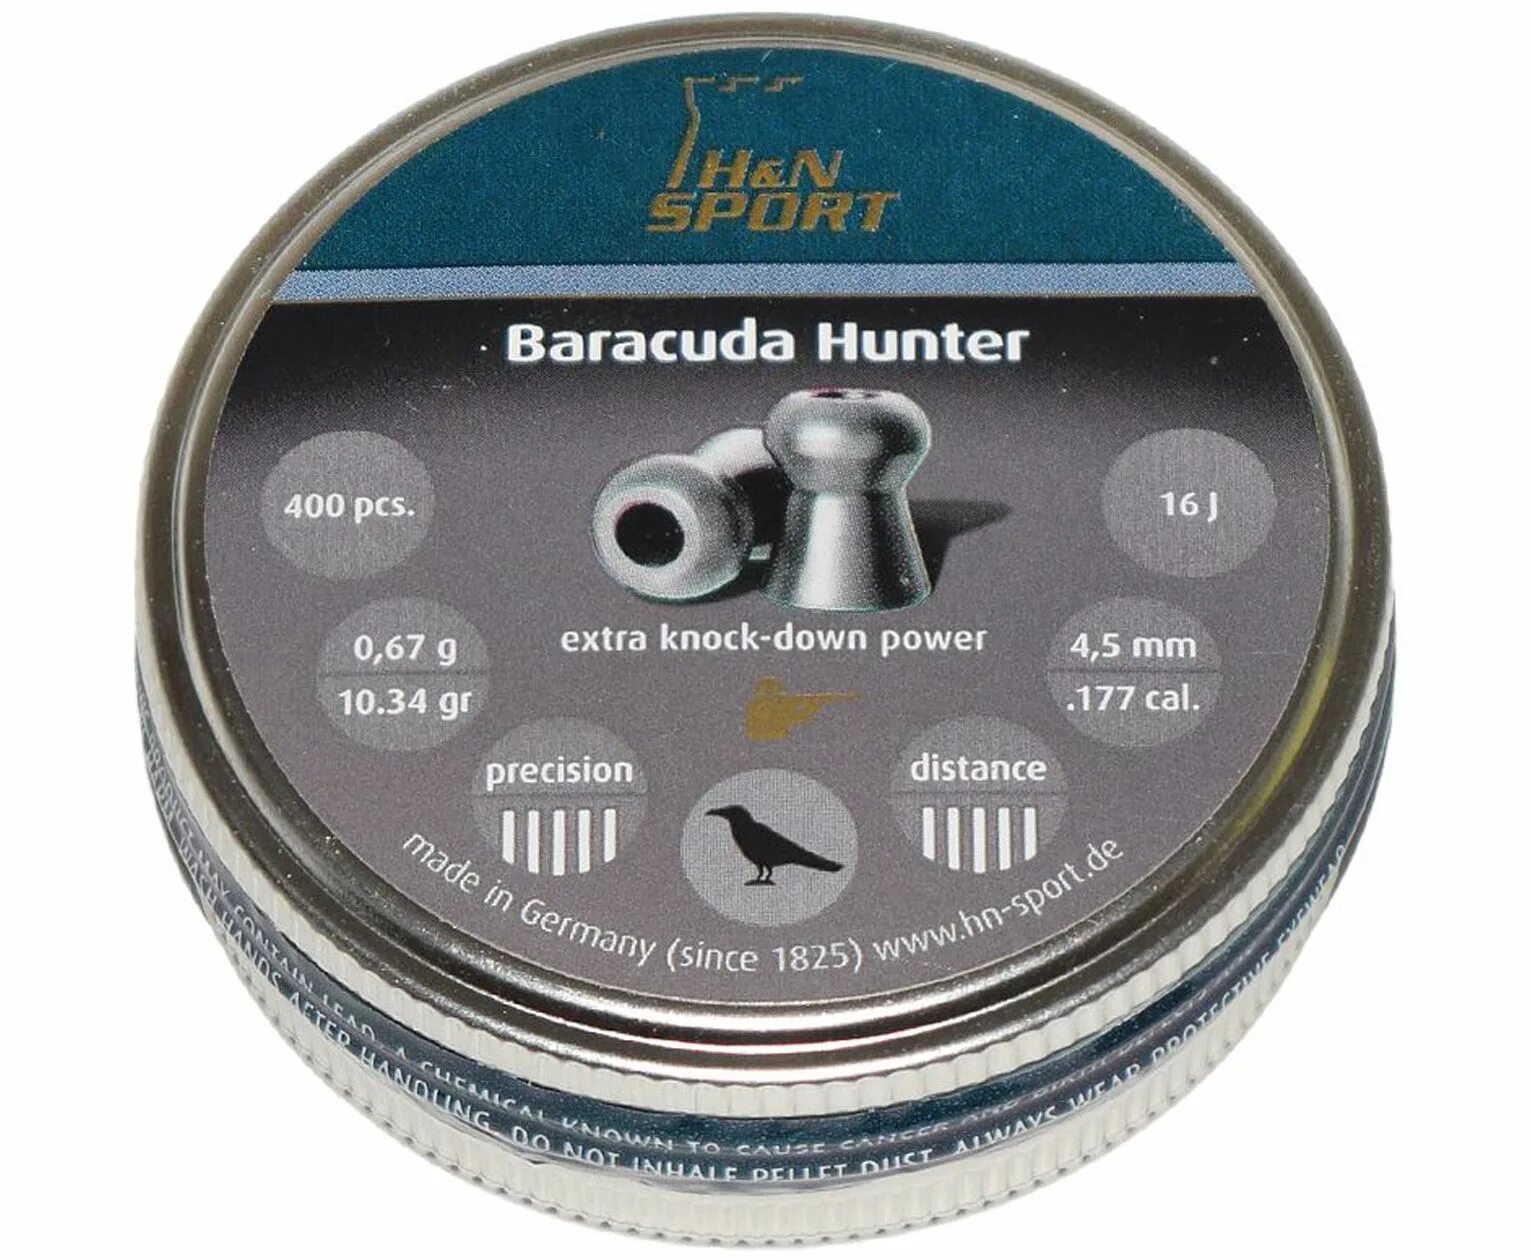 Пули Барракуда Хантер 4.5. Пули для пневматики 4.5 для Барракуда Хантер. Пули для пневматики h&n Baracuda Hunter 4.5 мм (400 шт.) - 0.67 Гр.. Barracuda Hunter 4.5. Хантер 0 хантер